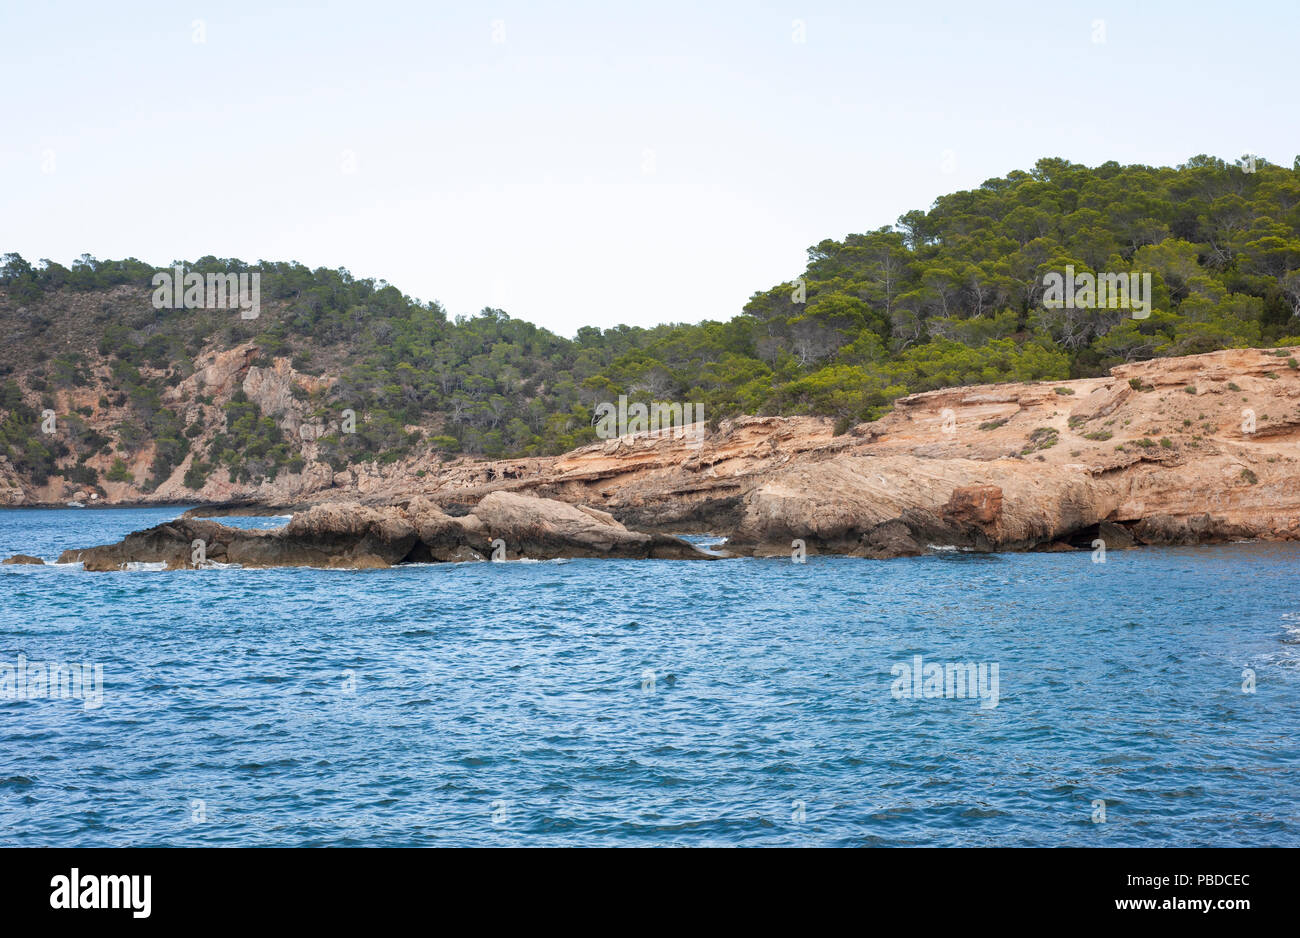 north eastern coast of Ibiza Island, Balearic Islands, Mediterranean Sea, Spain, Europe Stock Photo